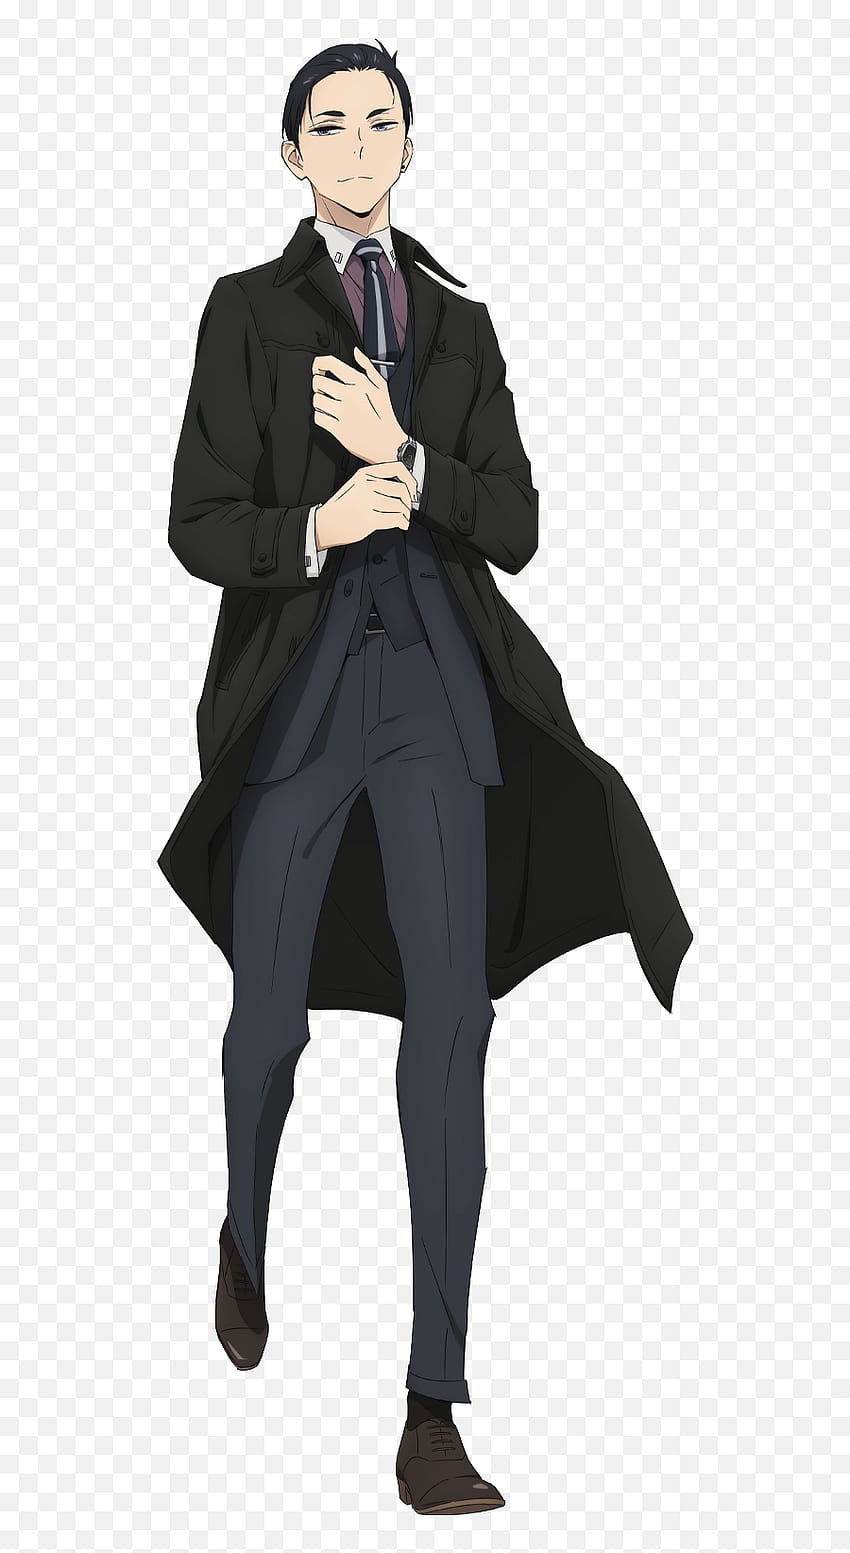 Suit male anime touch guts pose - Stock Illustration [49635602] - PIXTA